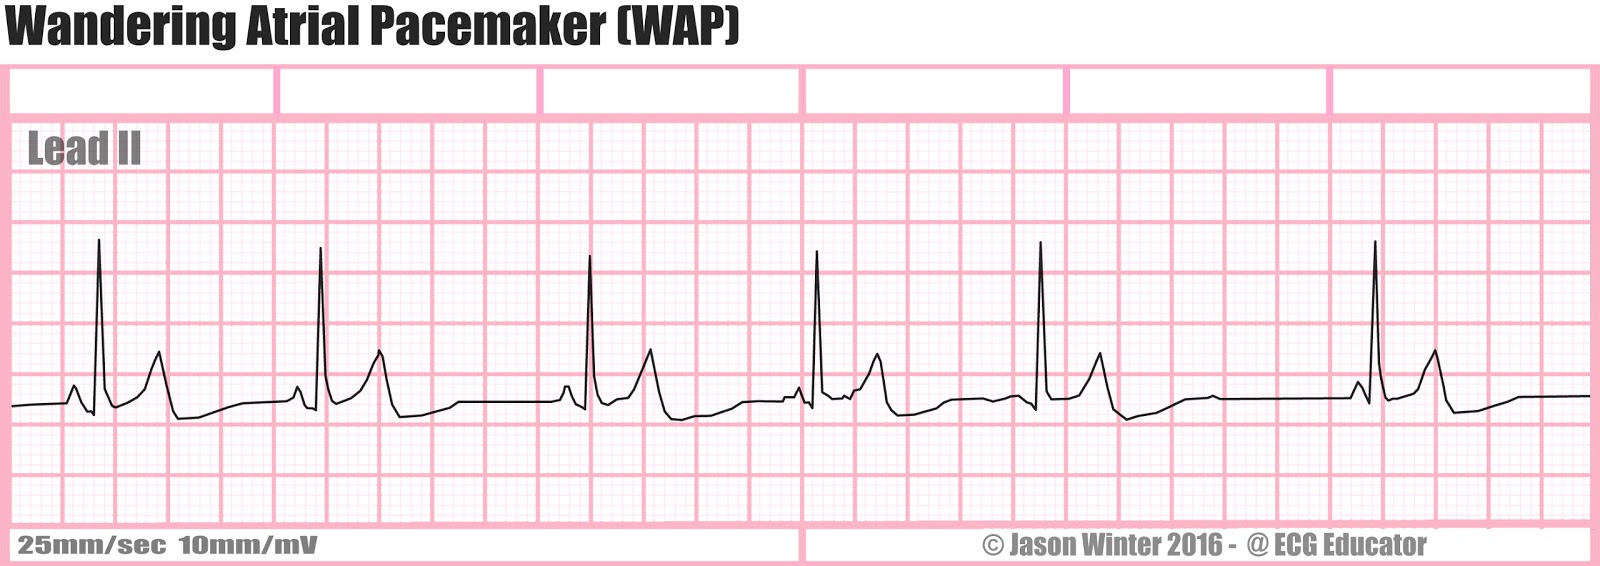 wandering pacemaker